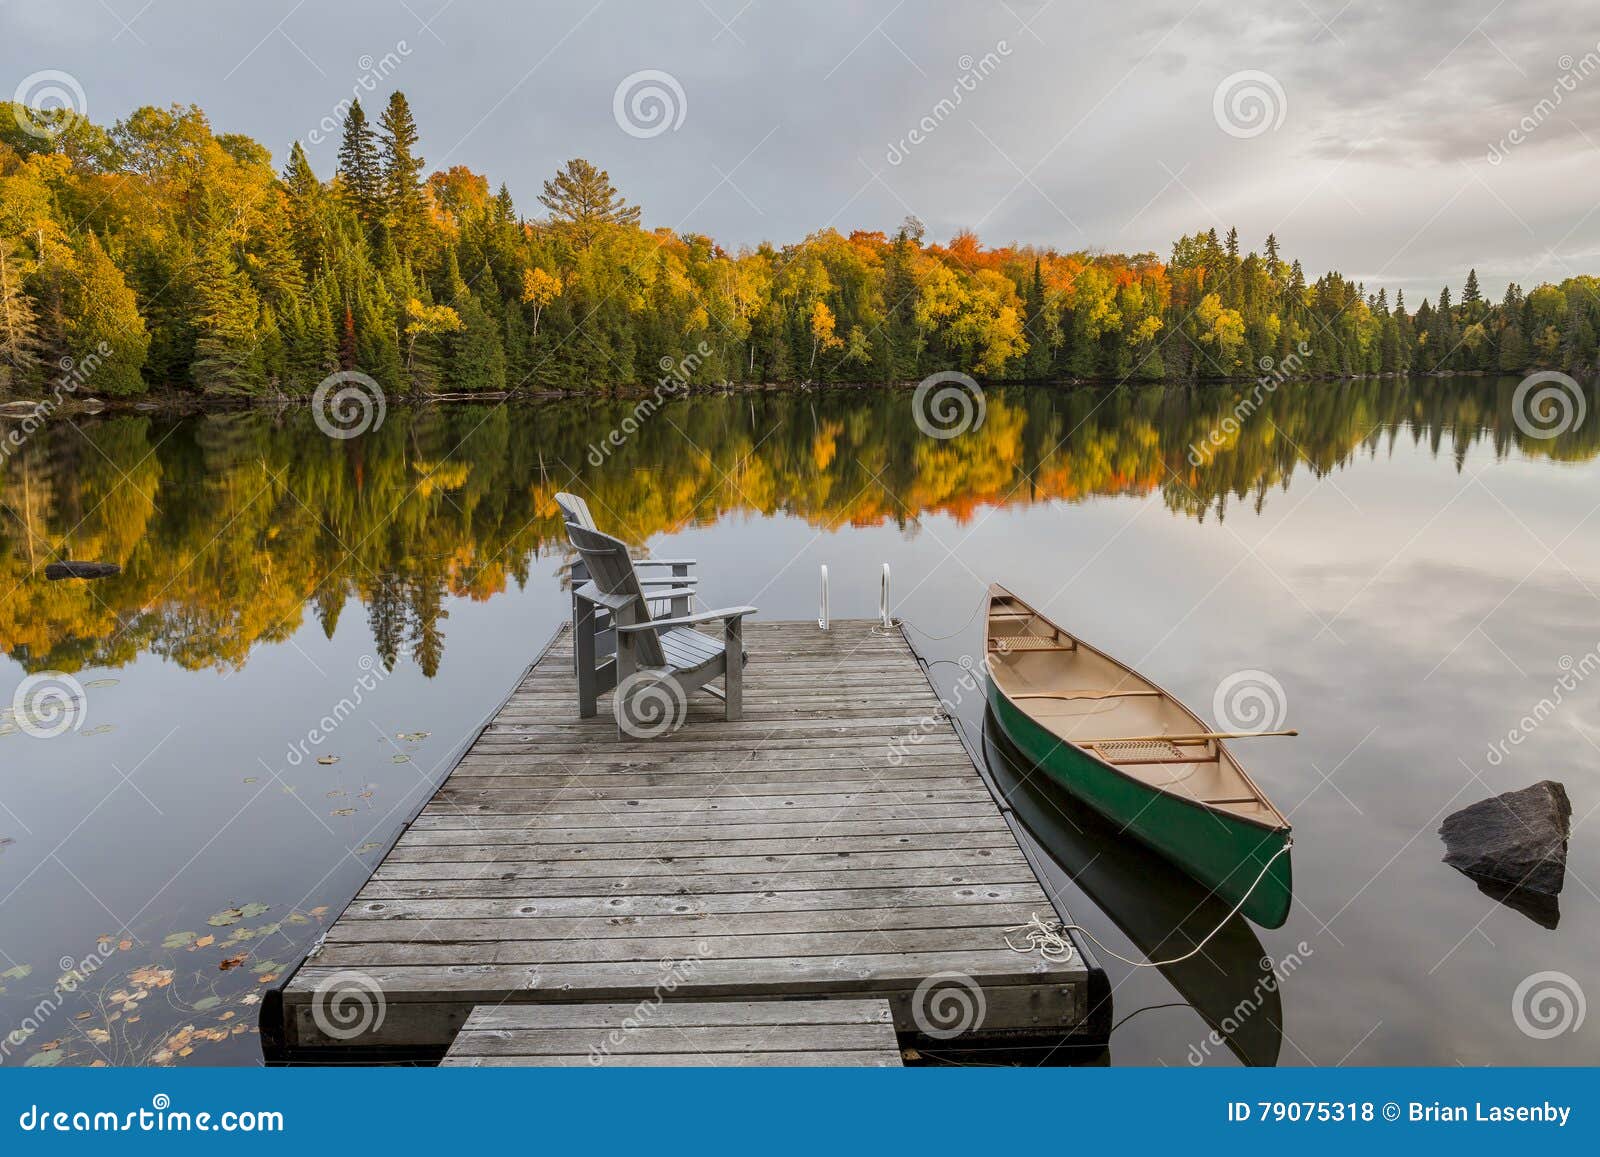 canoe and dock on an autumn lake - ontario, canada